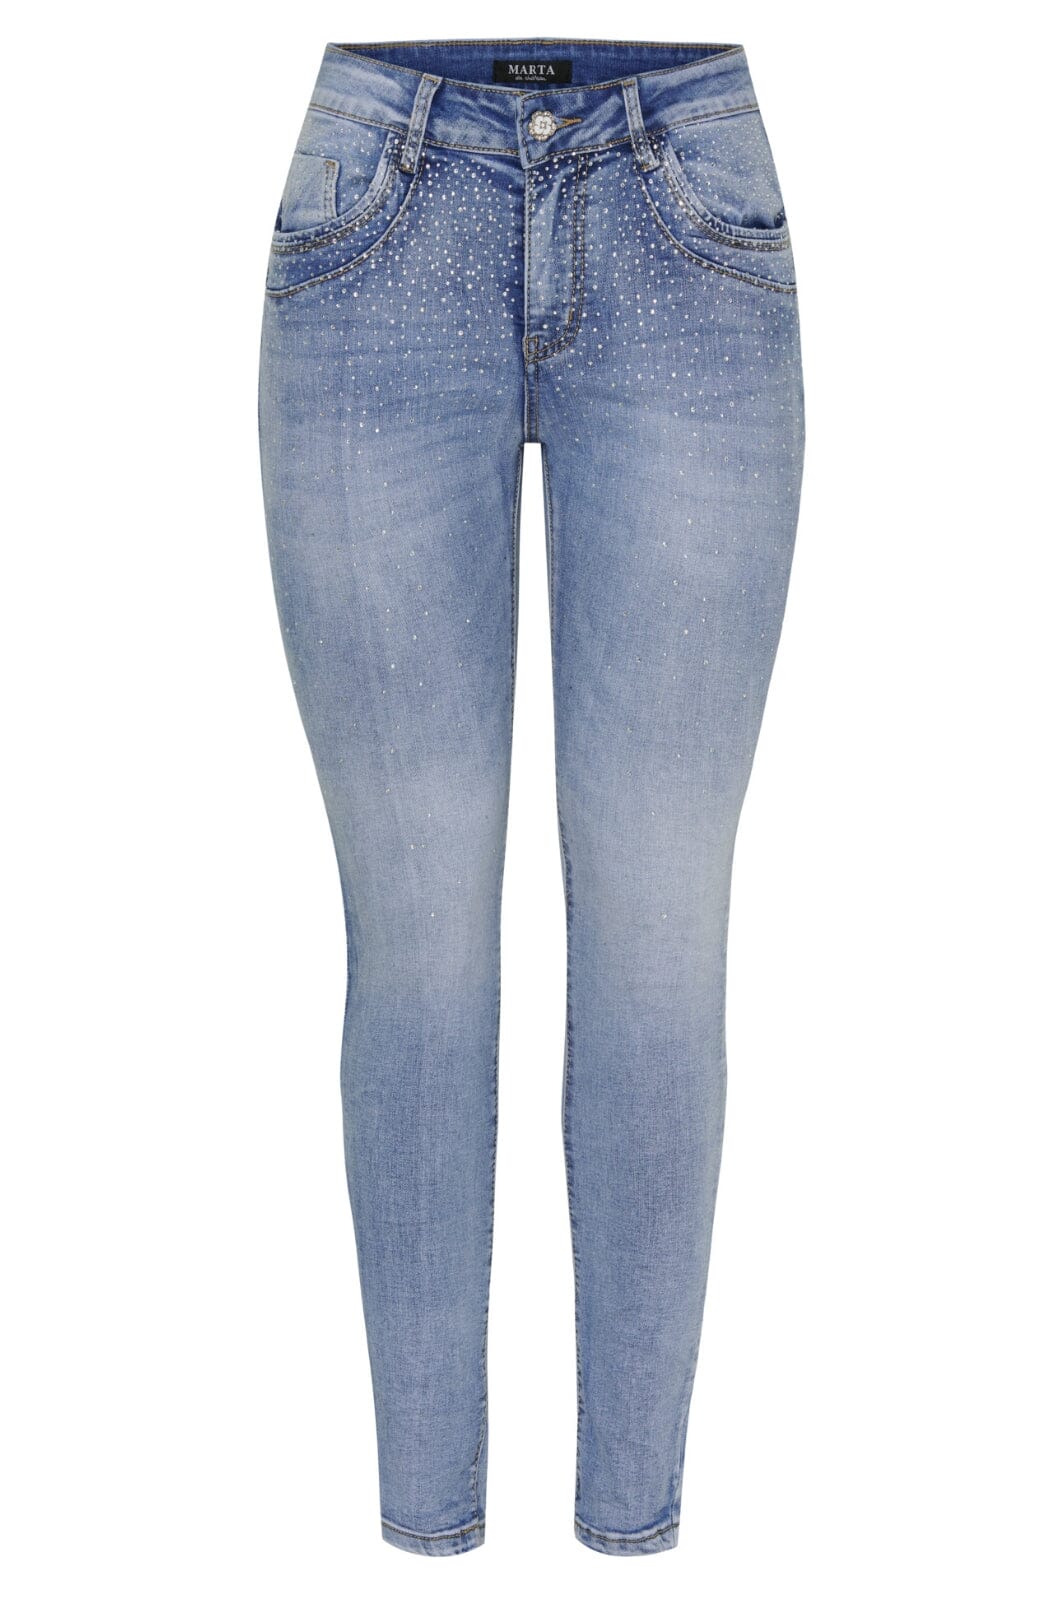 Marta Du Chateau - Emma 2606 Jeans - Dark Blue Denim Jeans 